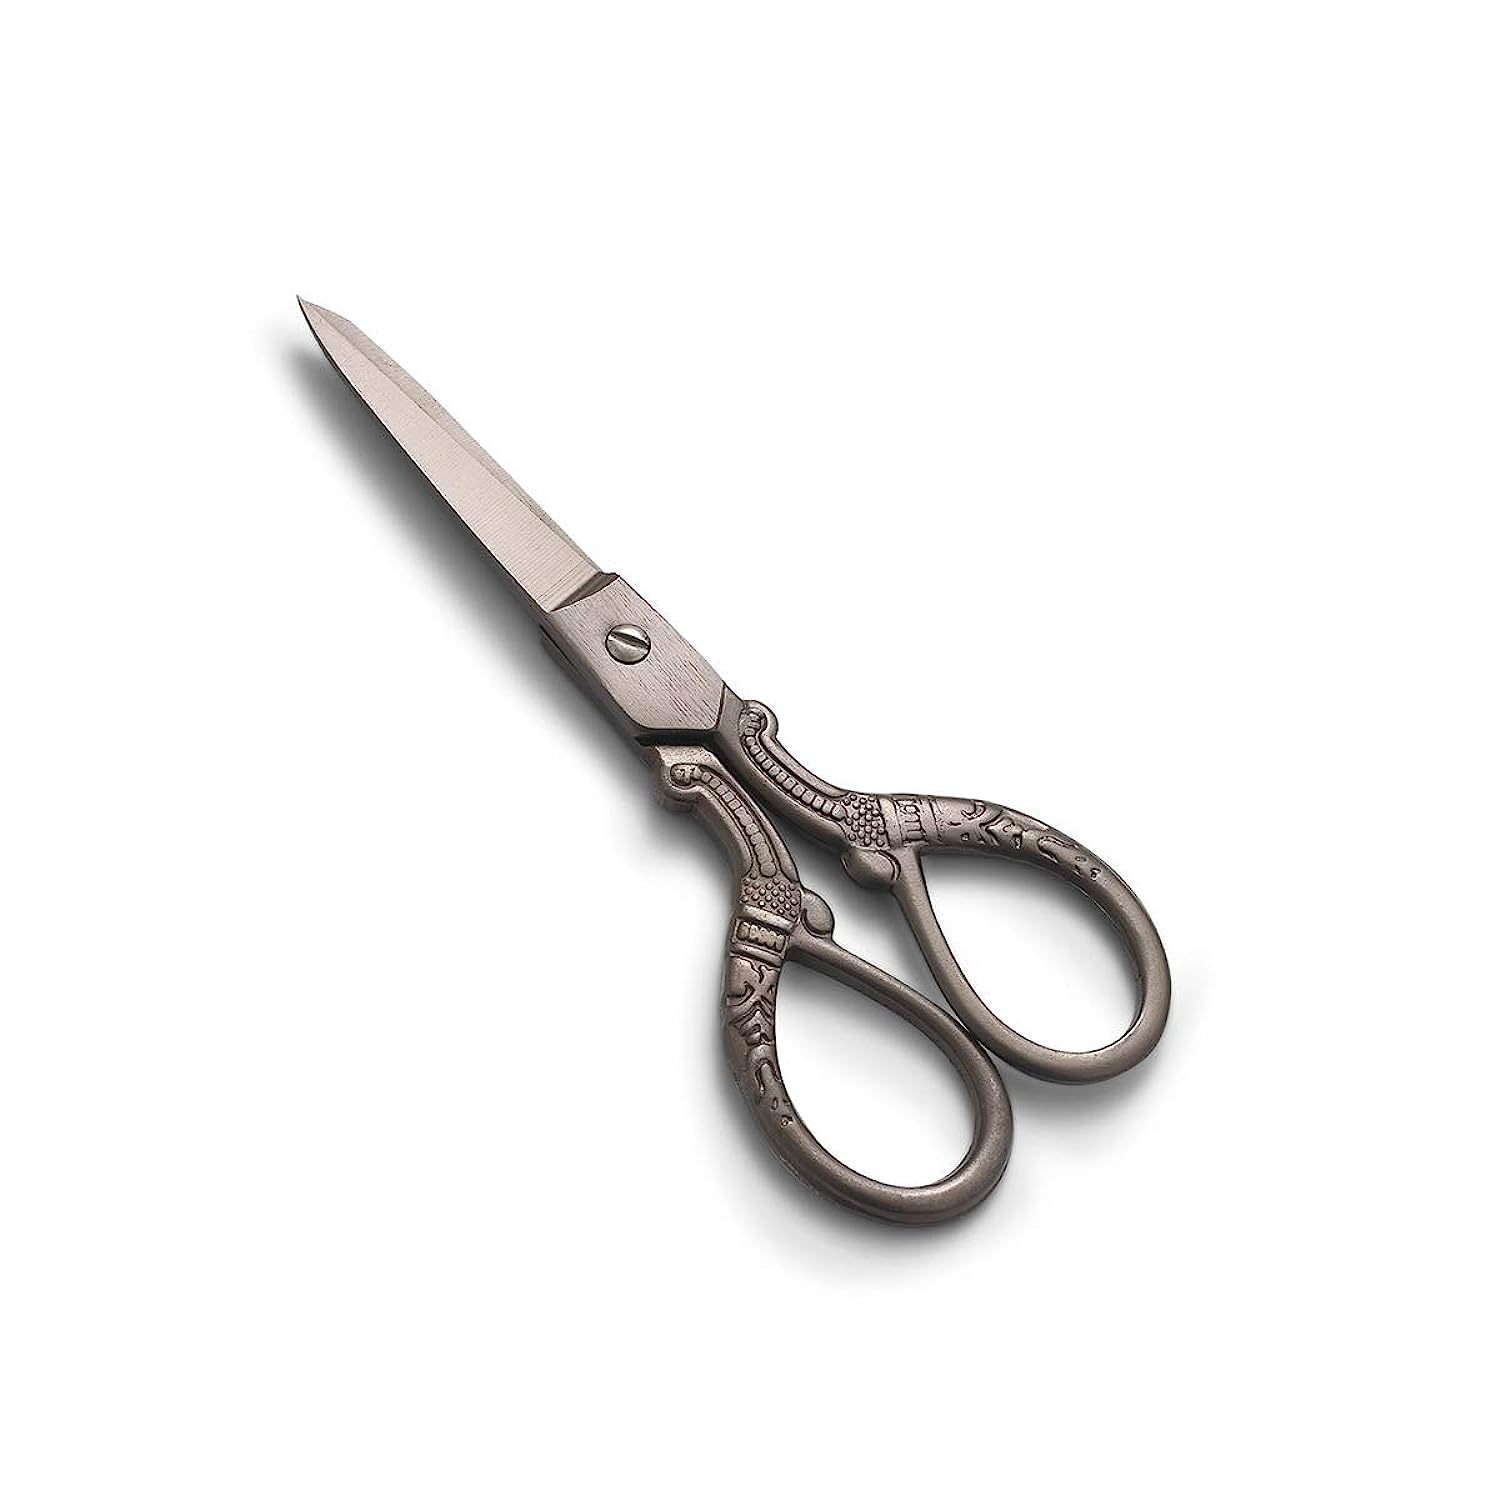 Fiskars 97047397J Beginner Sewing Scissors, 7-Inches